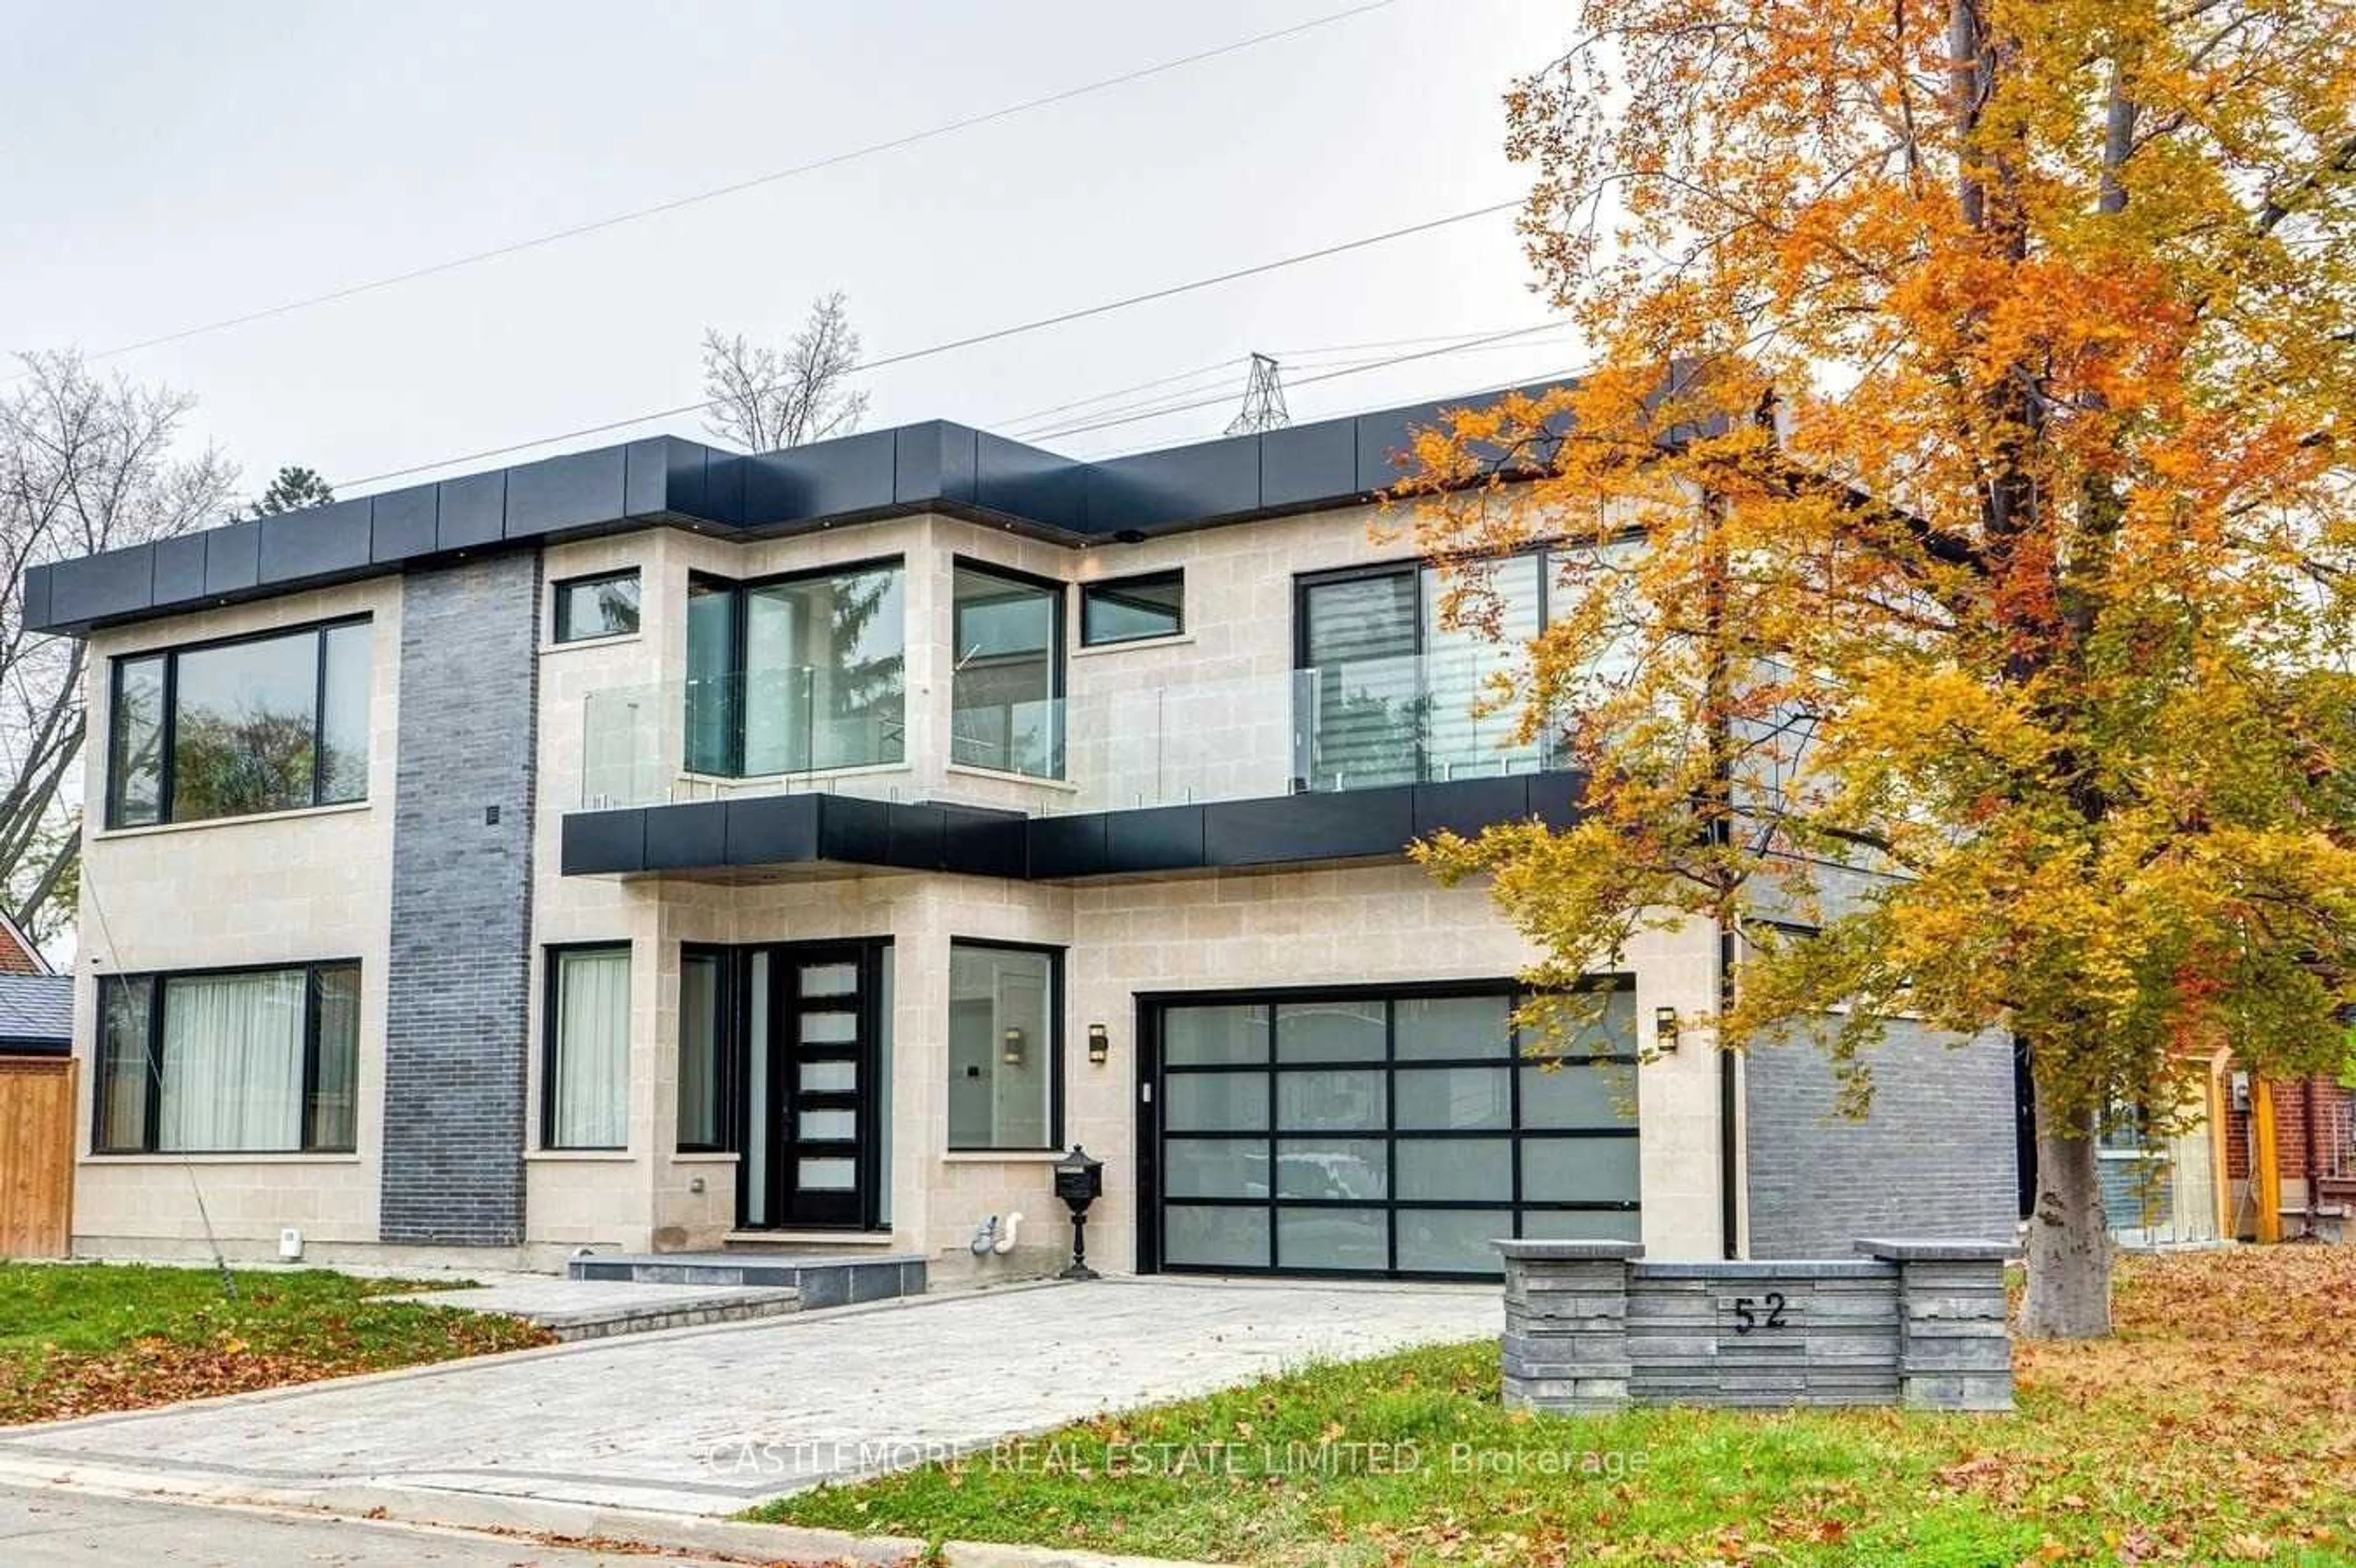 Home with brick exterior material for 52 Grantbrook St, Toronto Ontario M2R 2E9